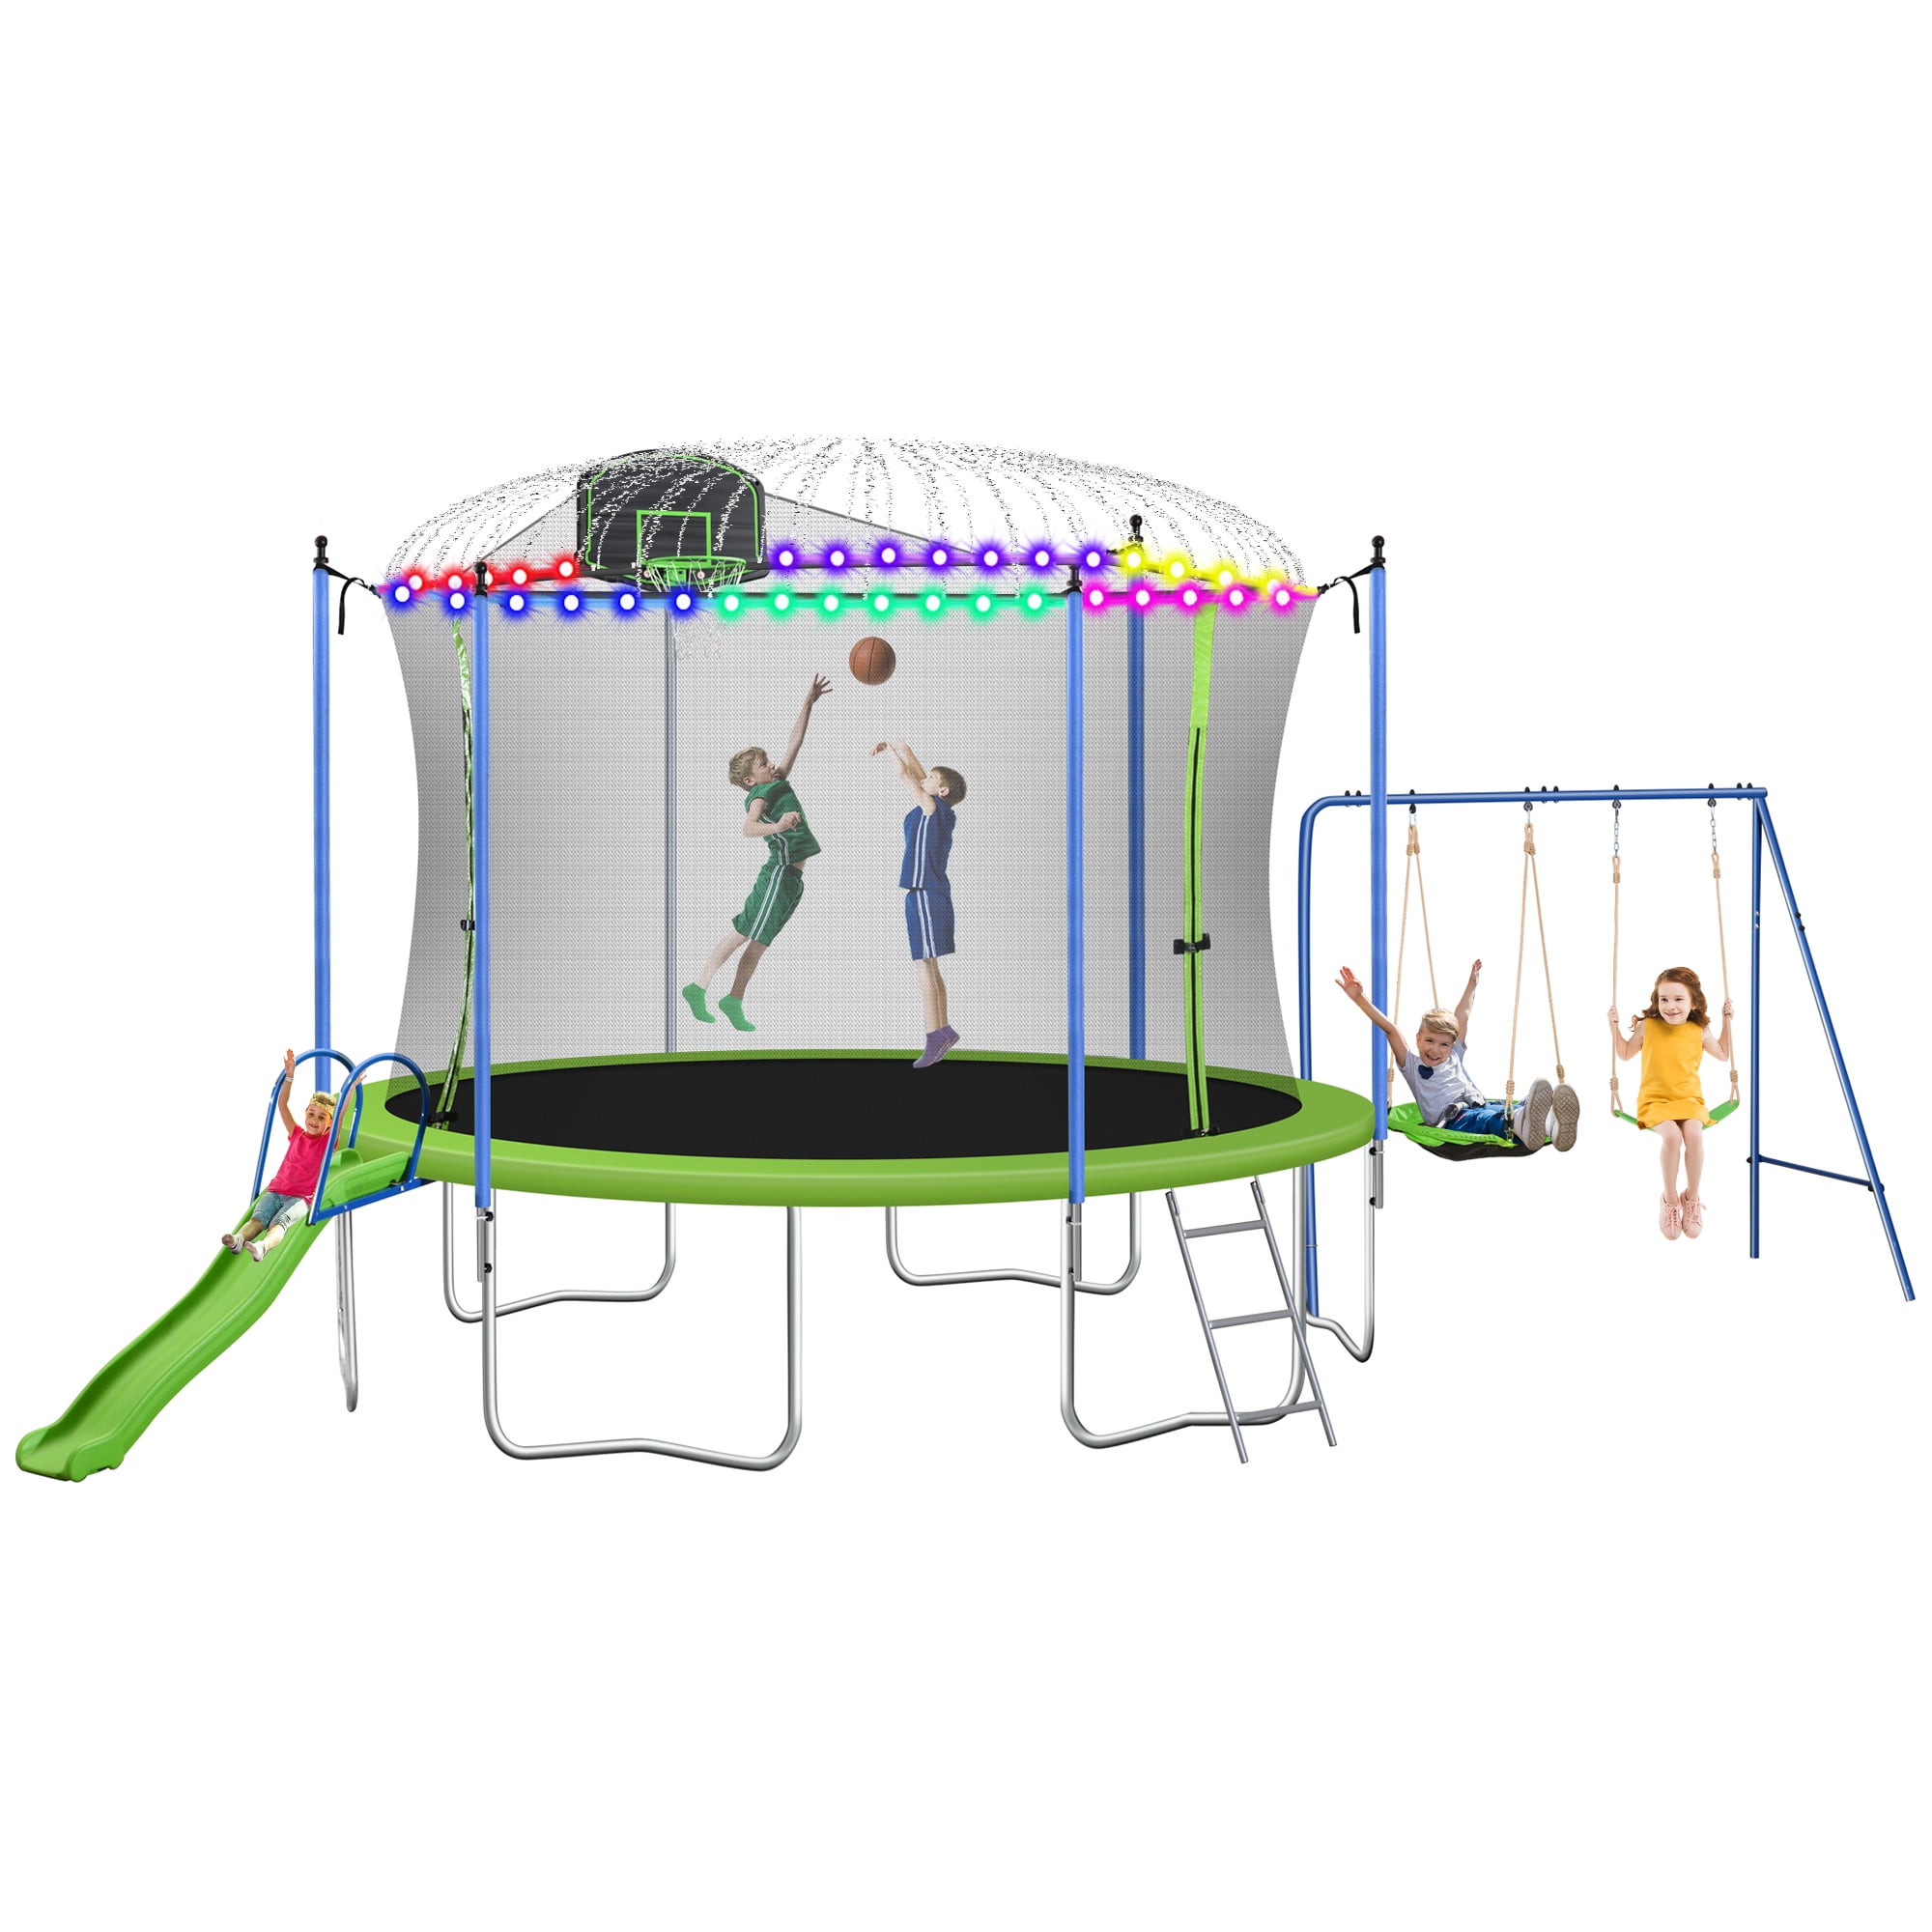 Jump Into Fun Trampoline 12FT for Kids/Adults, Trampoline with Enclosure, Swing, Slide, Basketball Hoop, LED Light, Sprinkler, Outdoor Recreational for Backyard Capacity 5-8 Kids